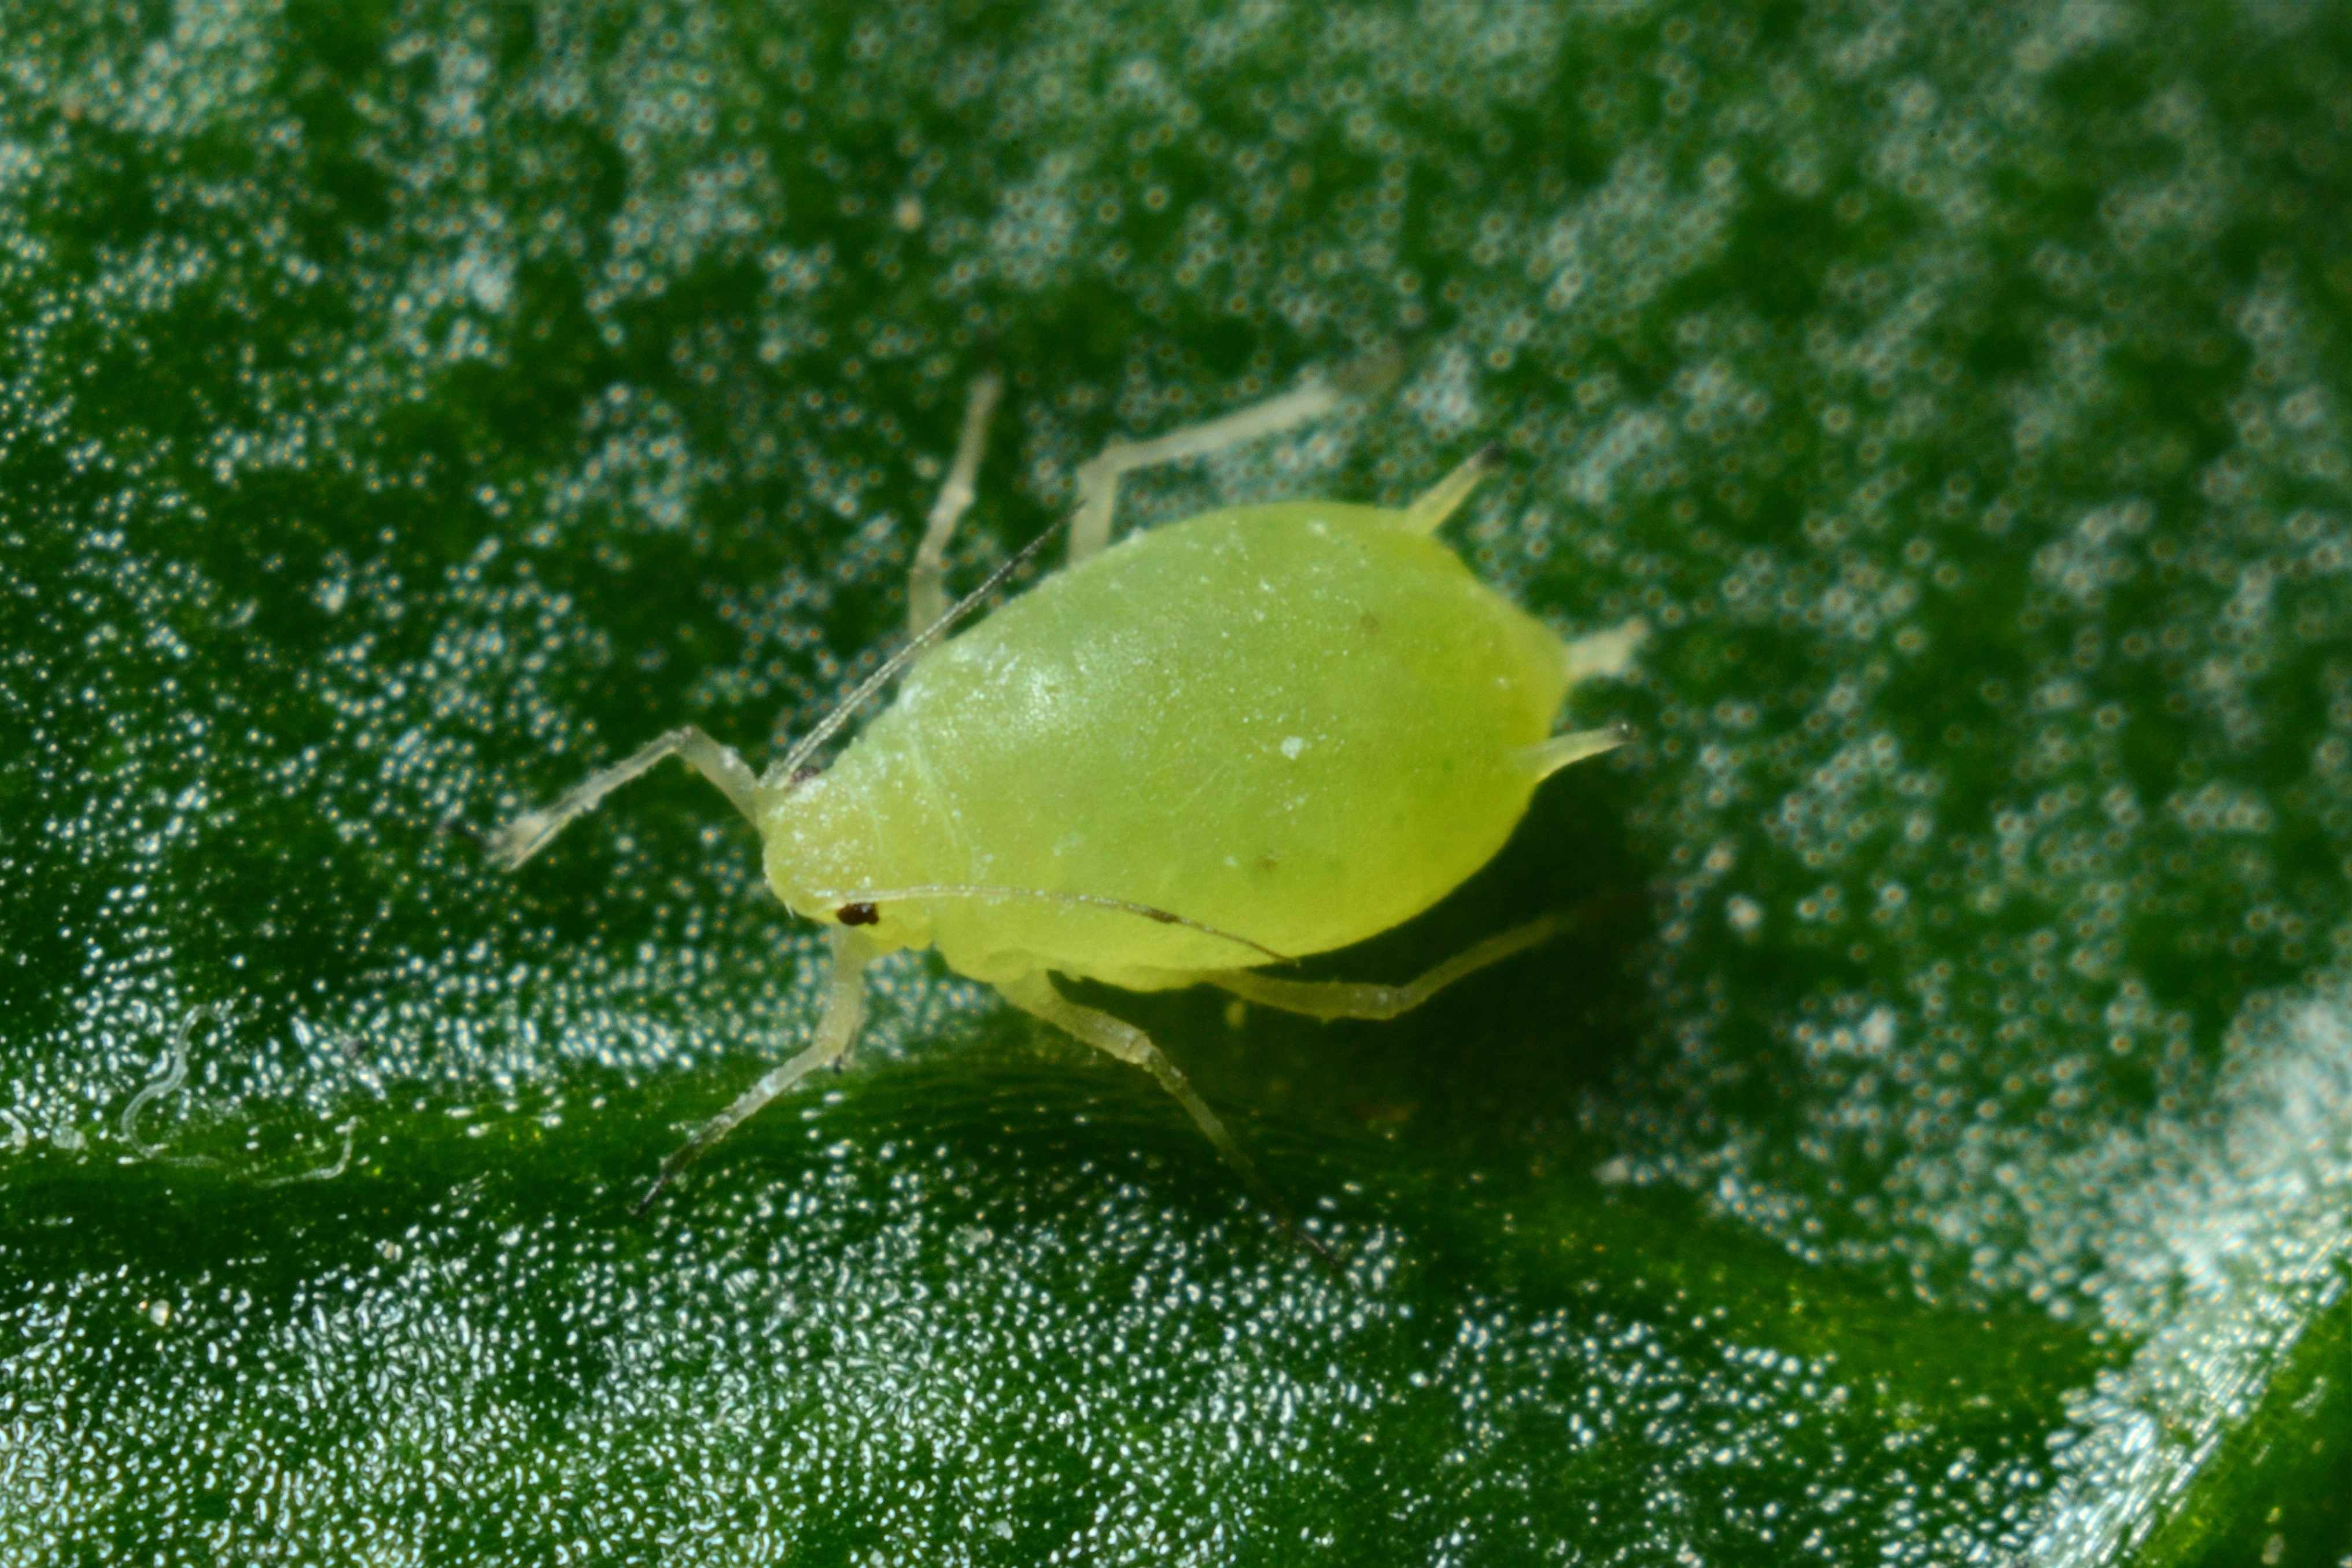 Aphid on a leaf